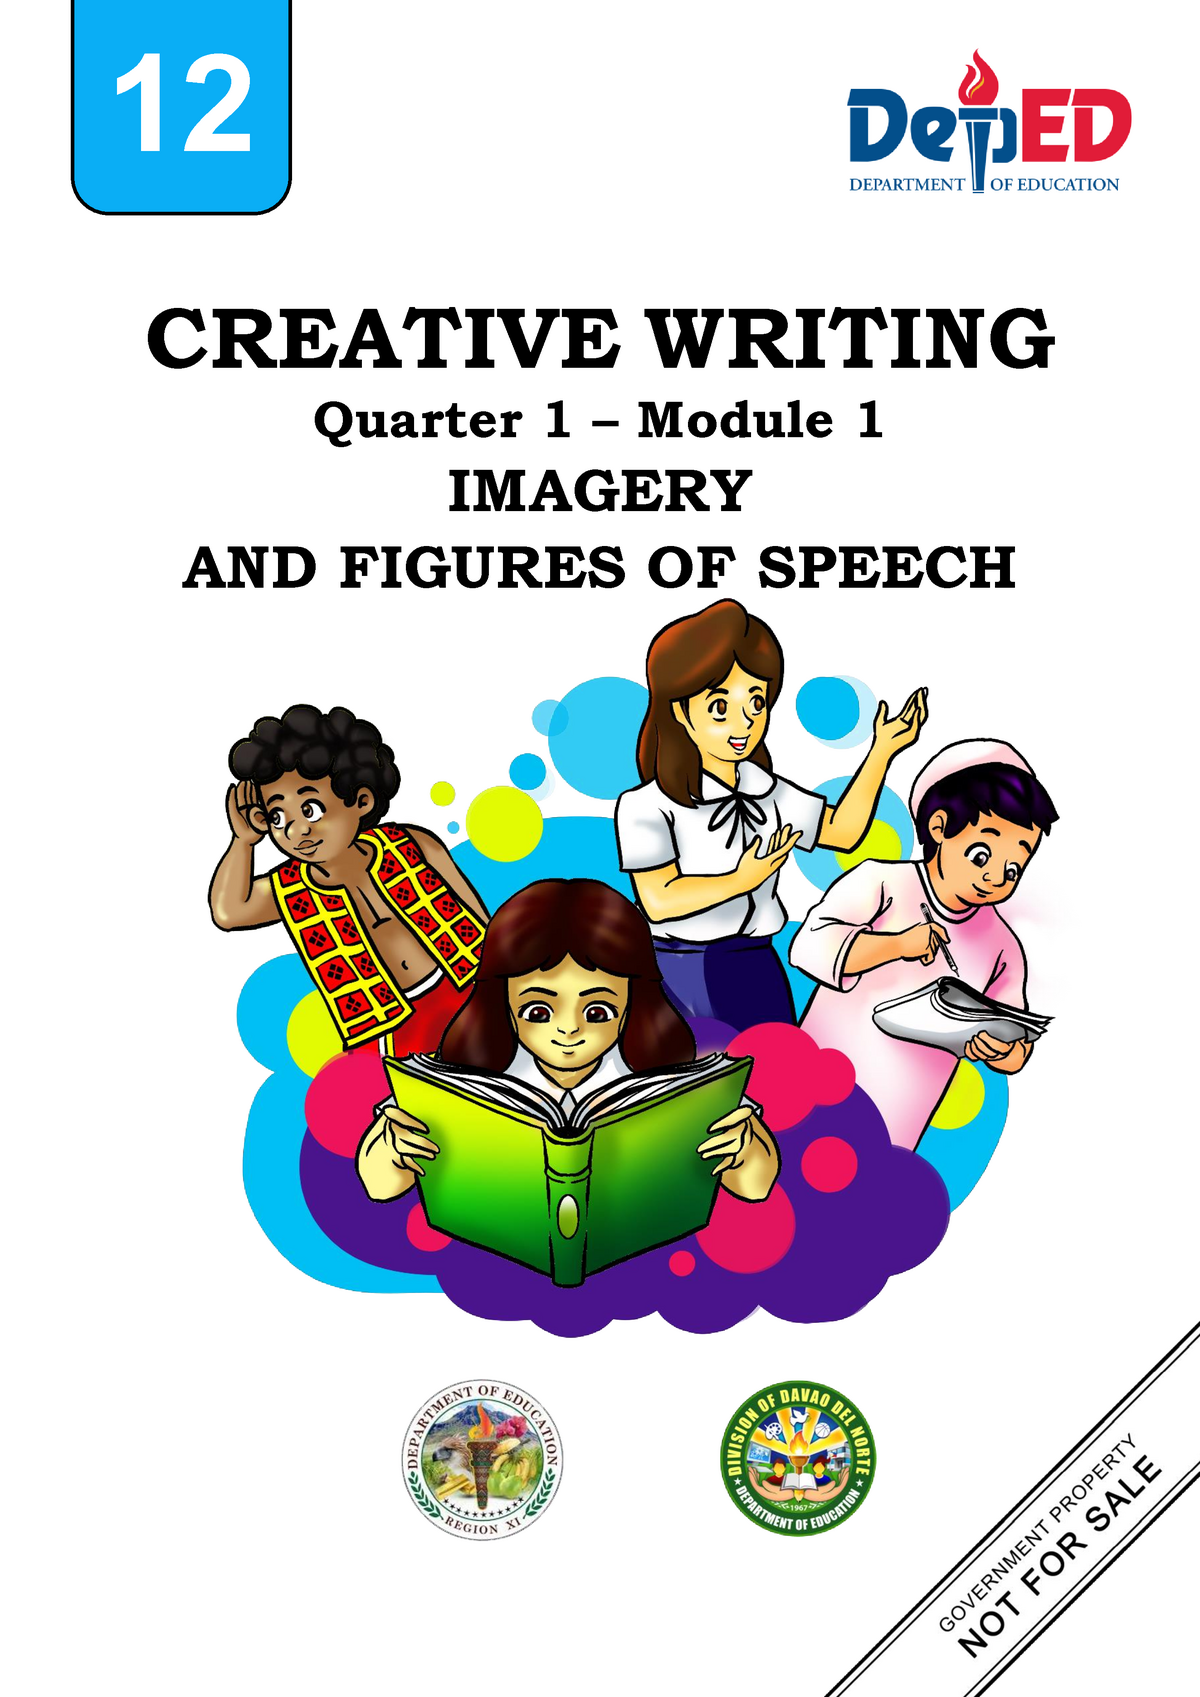 grade 12 creative writing module 1 answer key brainly